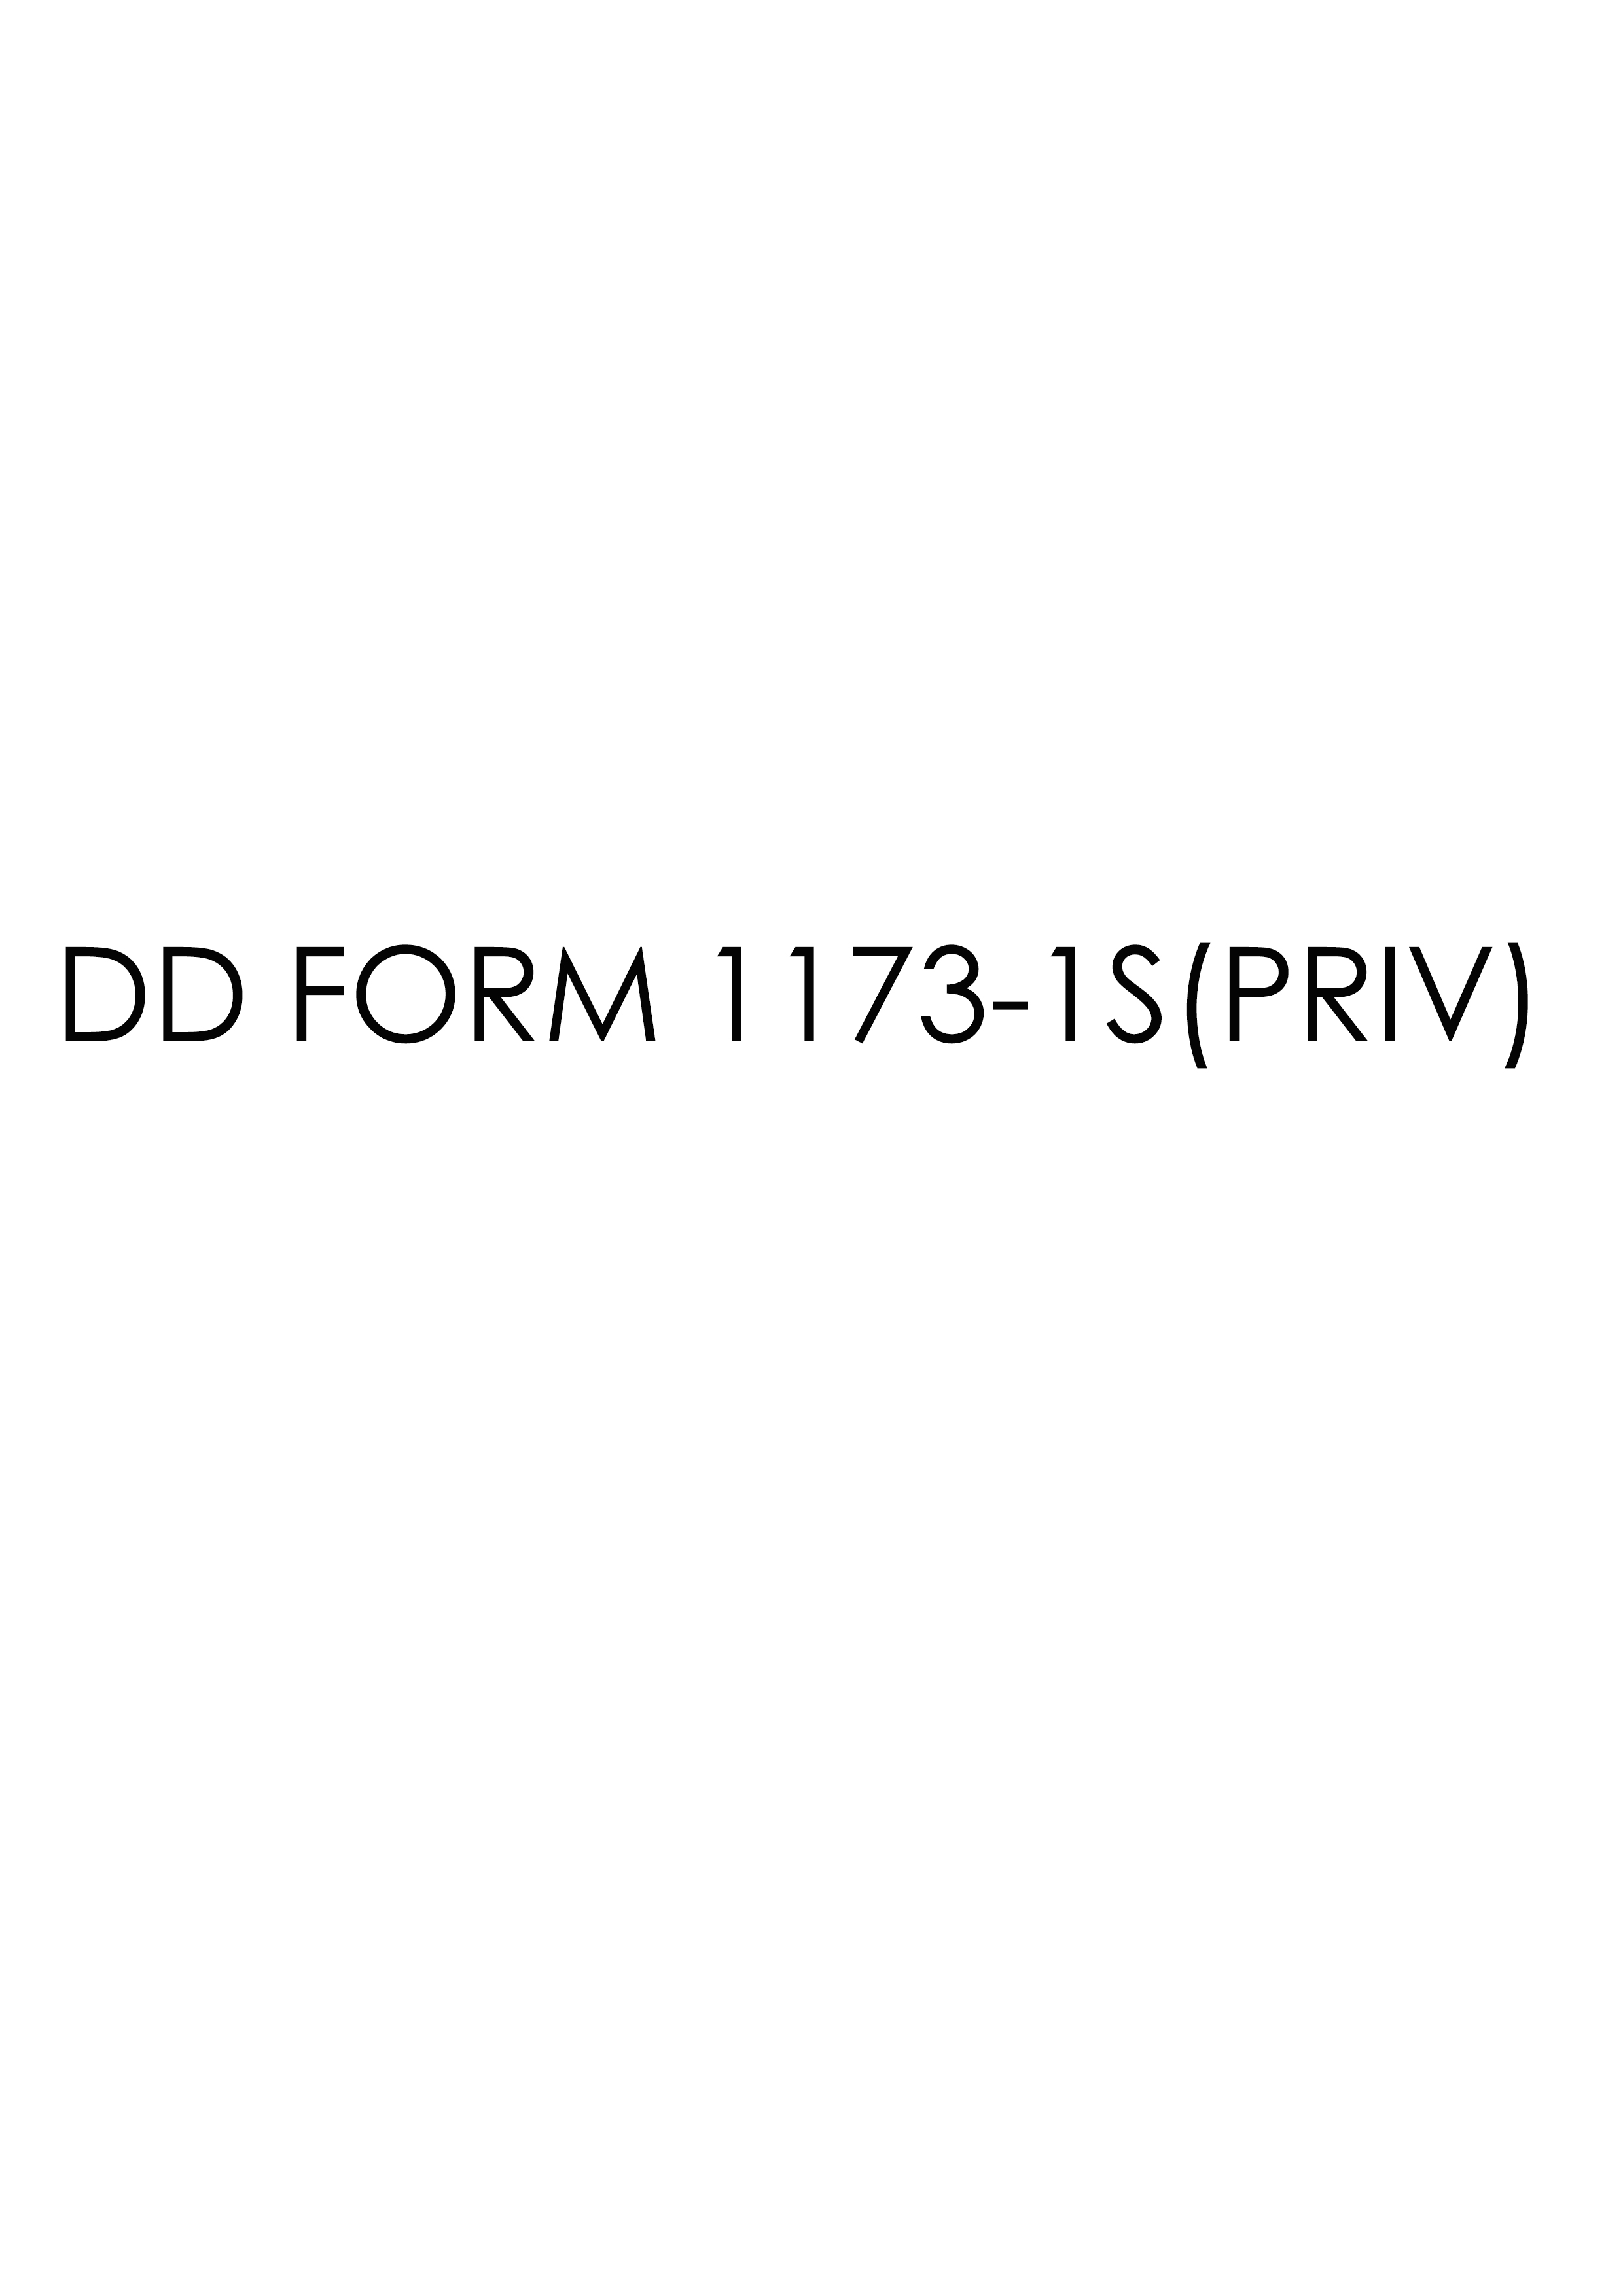 Download Fillable dd Form 1173-1S(PRIV)